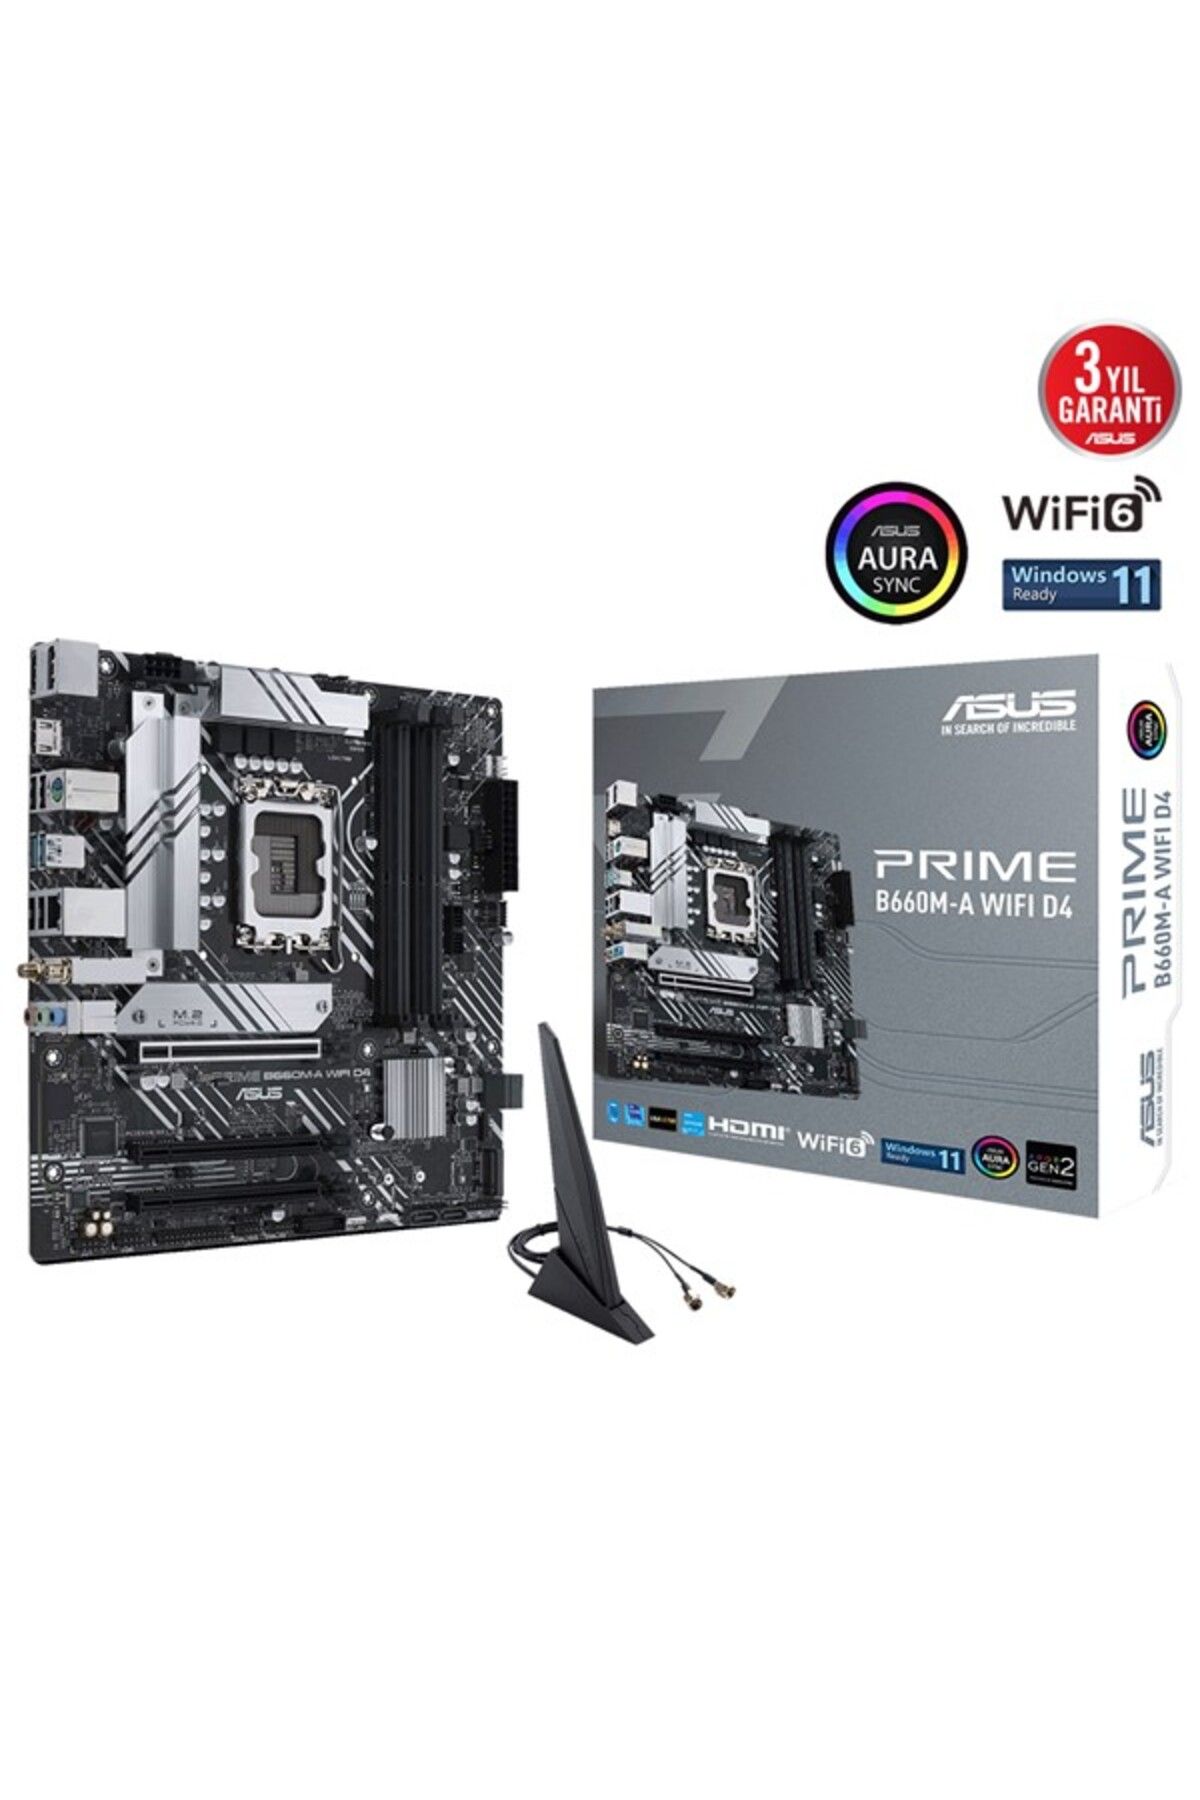 ASUS PRIME PRIME B660M-A WIFI D4 DDR4 M2 PCIe NVME HDMI DP PCIe 16X v4.0 1700p mATX